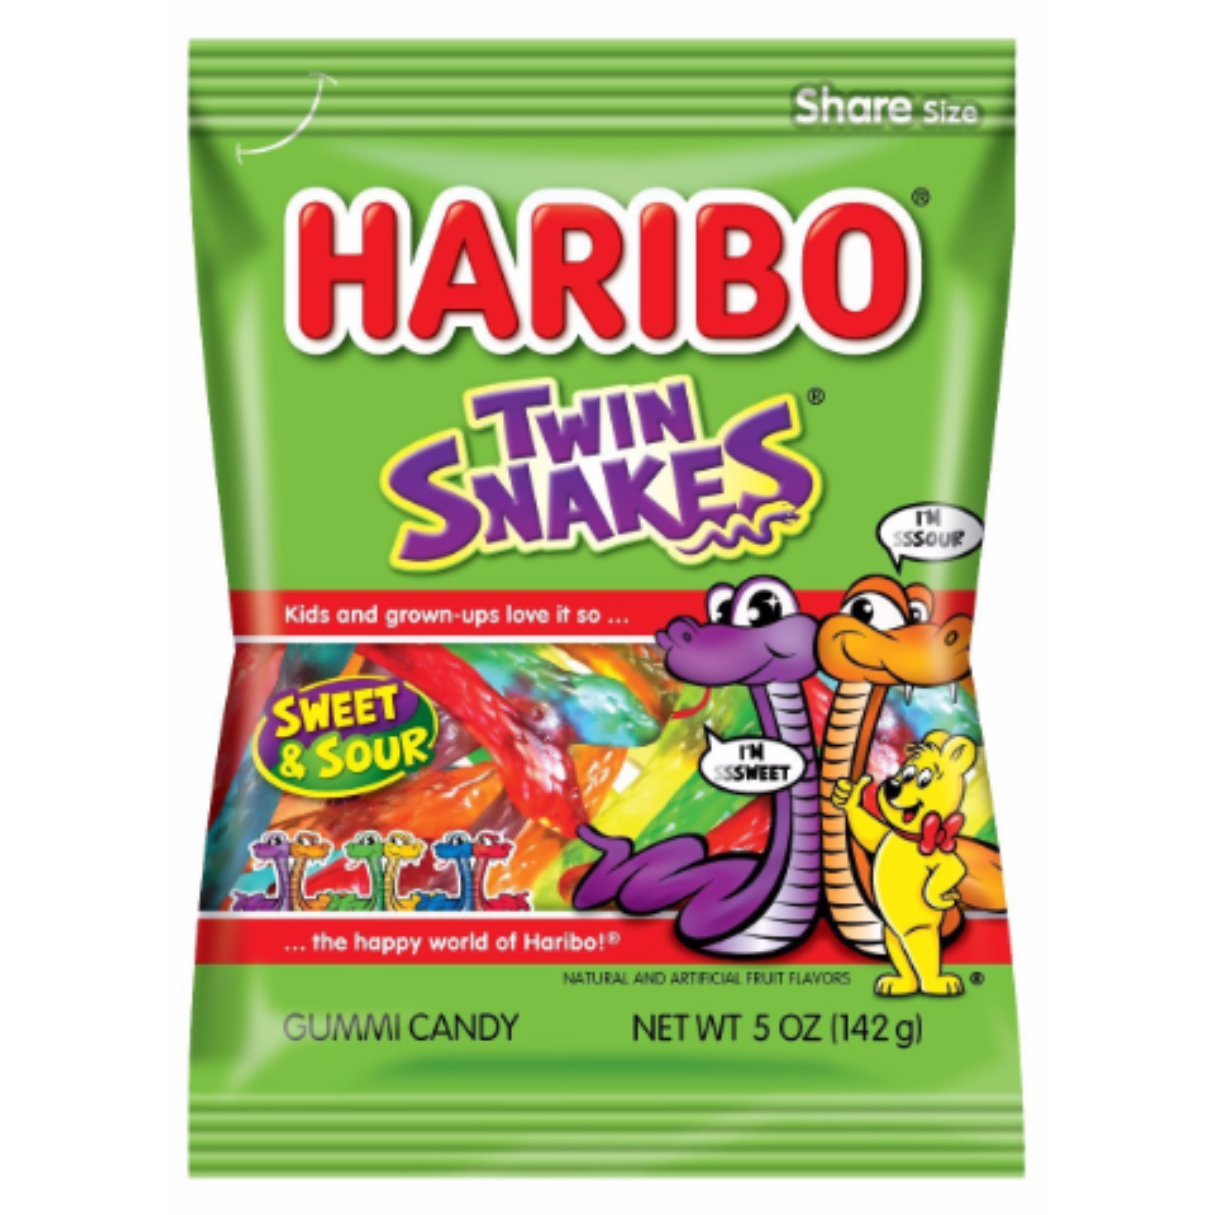 Haribo Twin Snakes Gummi Candy 5oz - 12ct